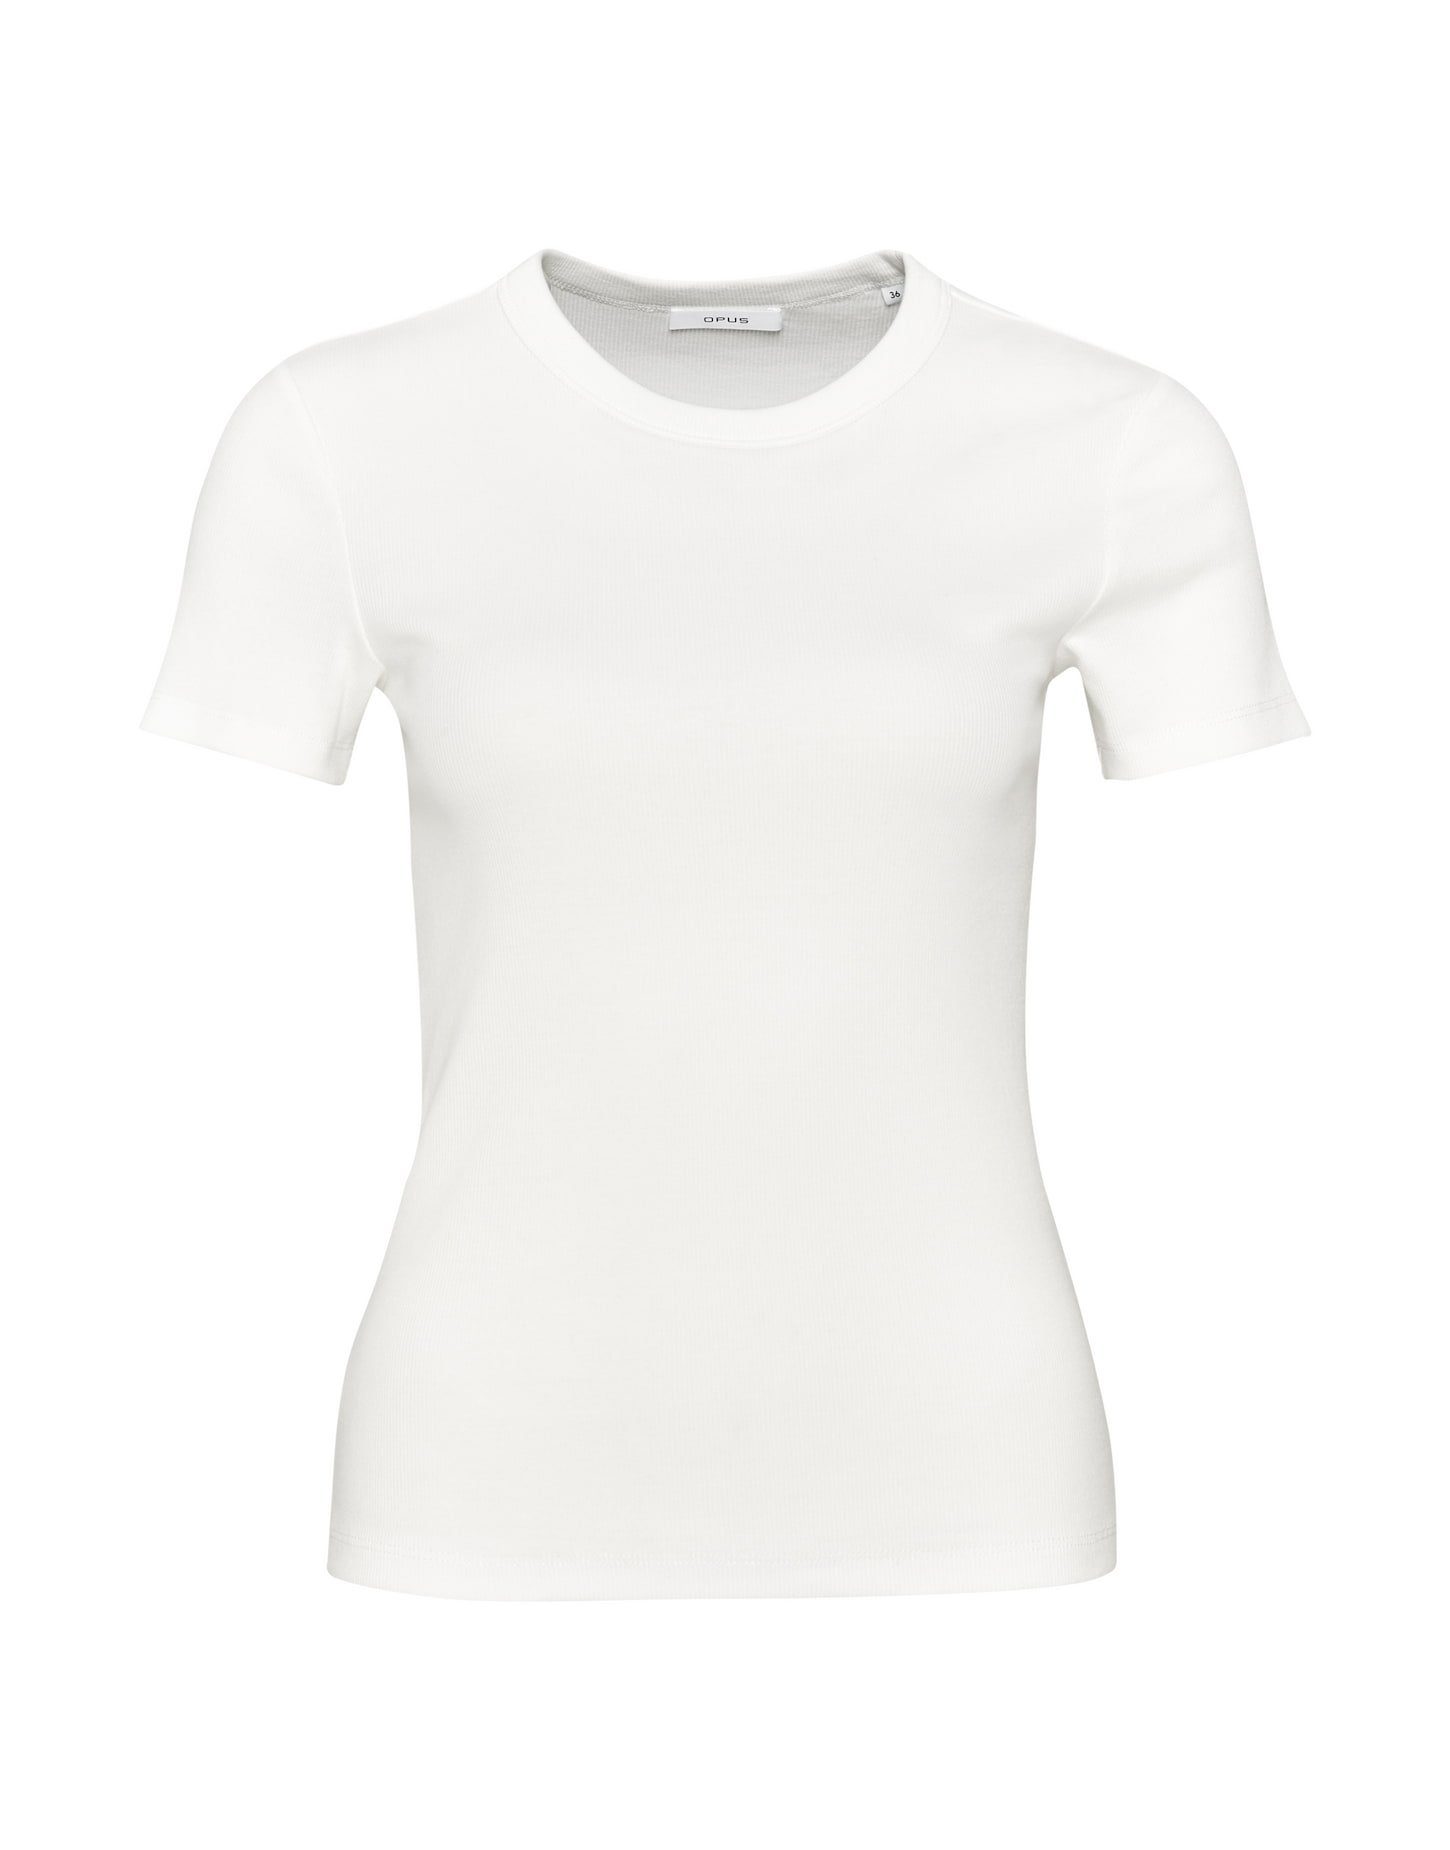 Samuna milk T-Shirt / 1004 / Da.Sweatshirt OPUS OPUS